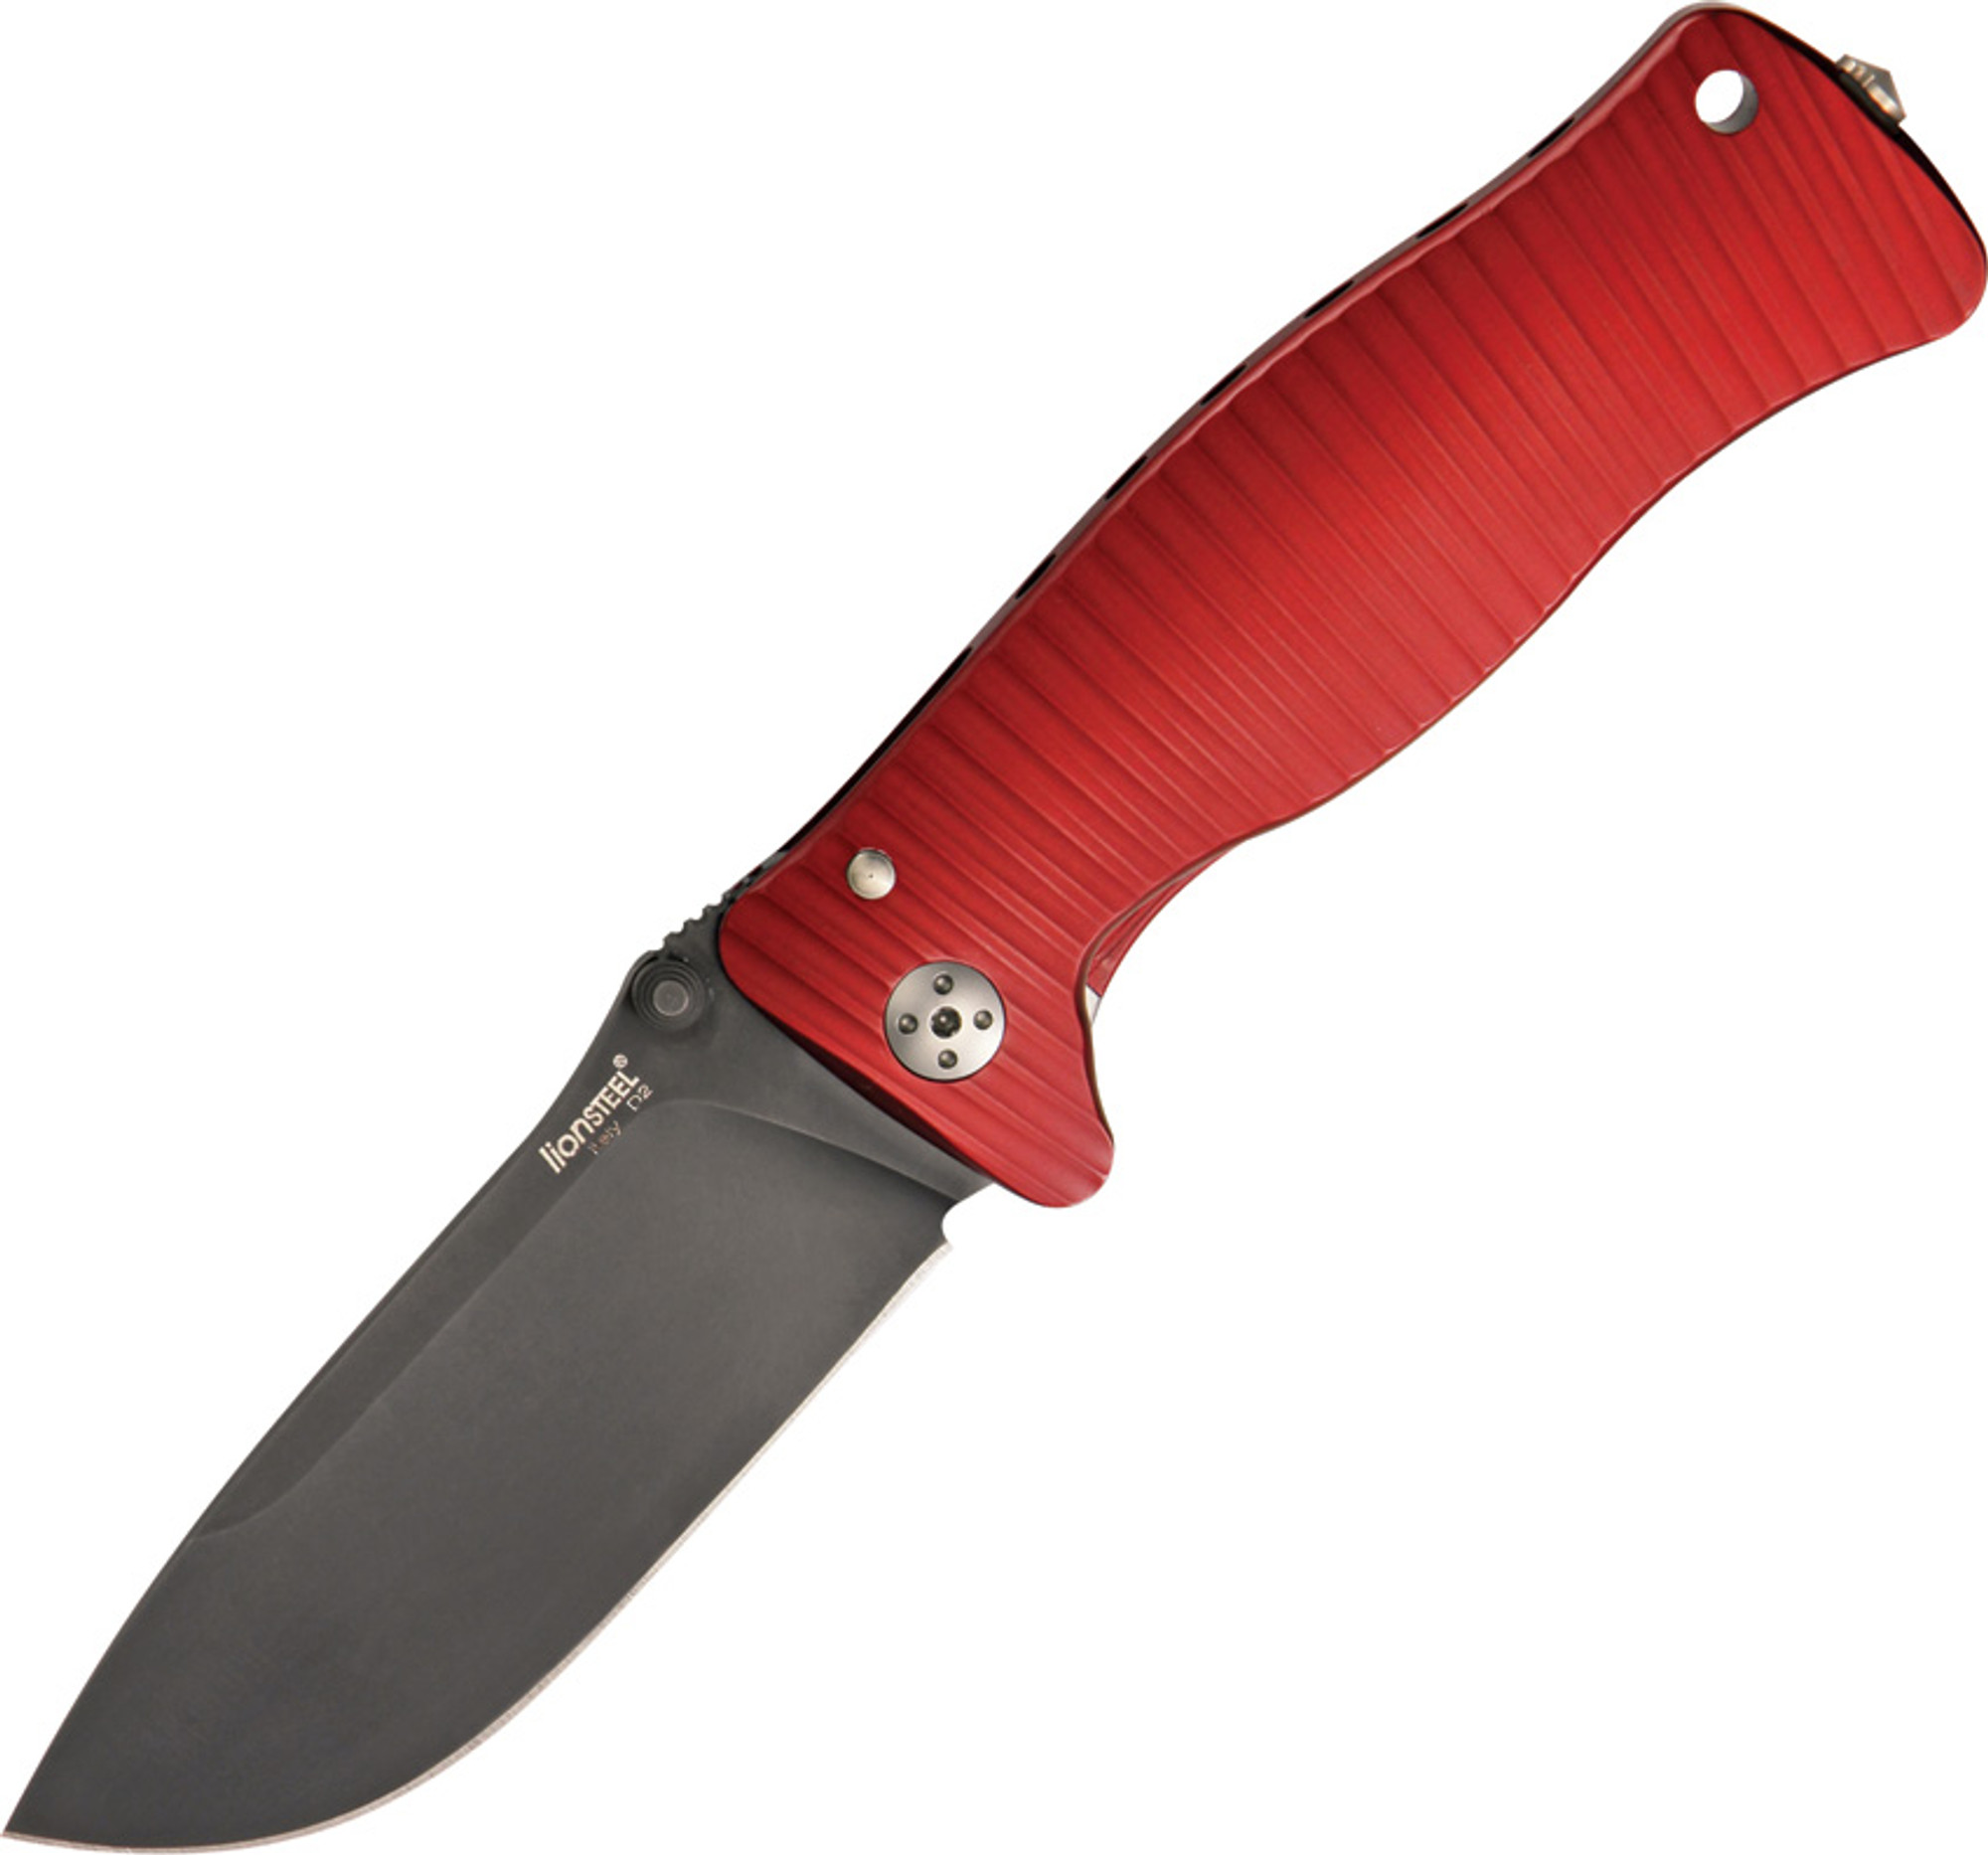 Lion Steel SR1ARB Molletta - Red Aluminum Handle, Black Blade